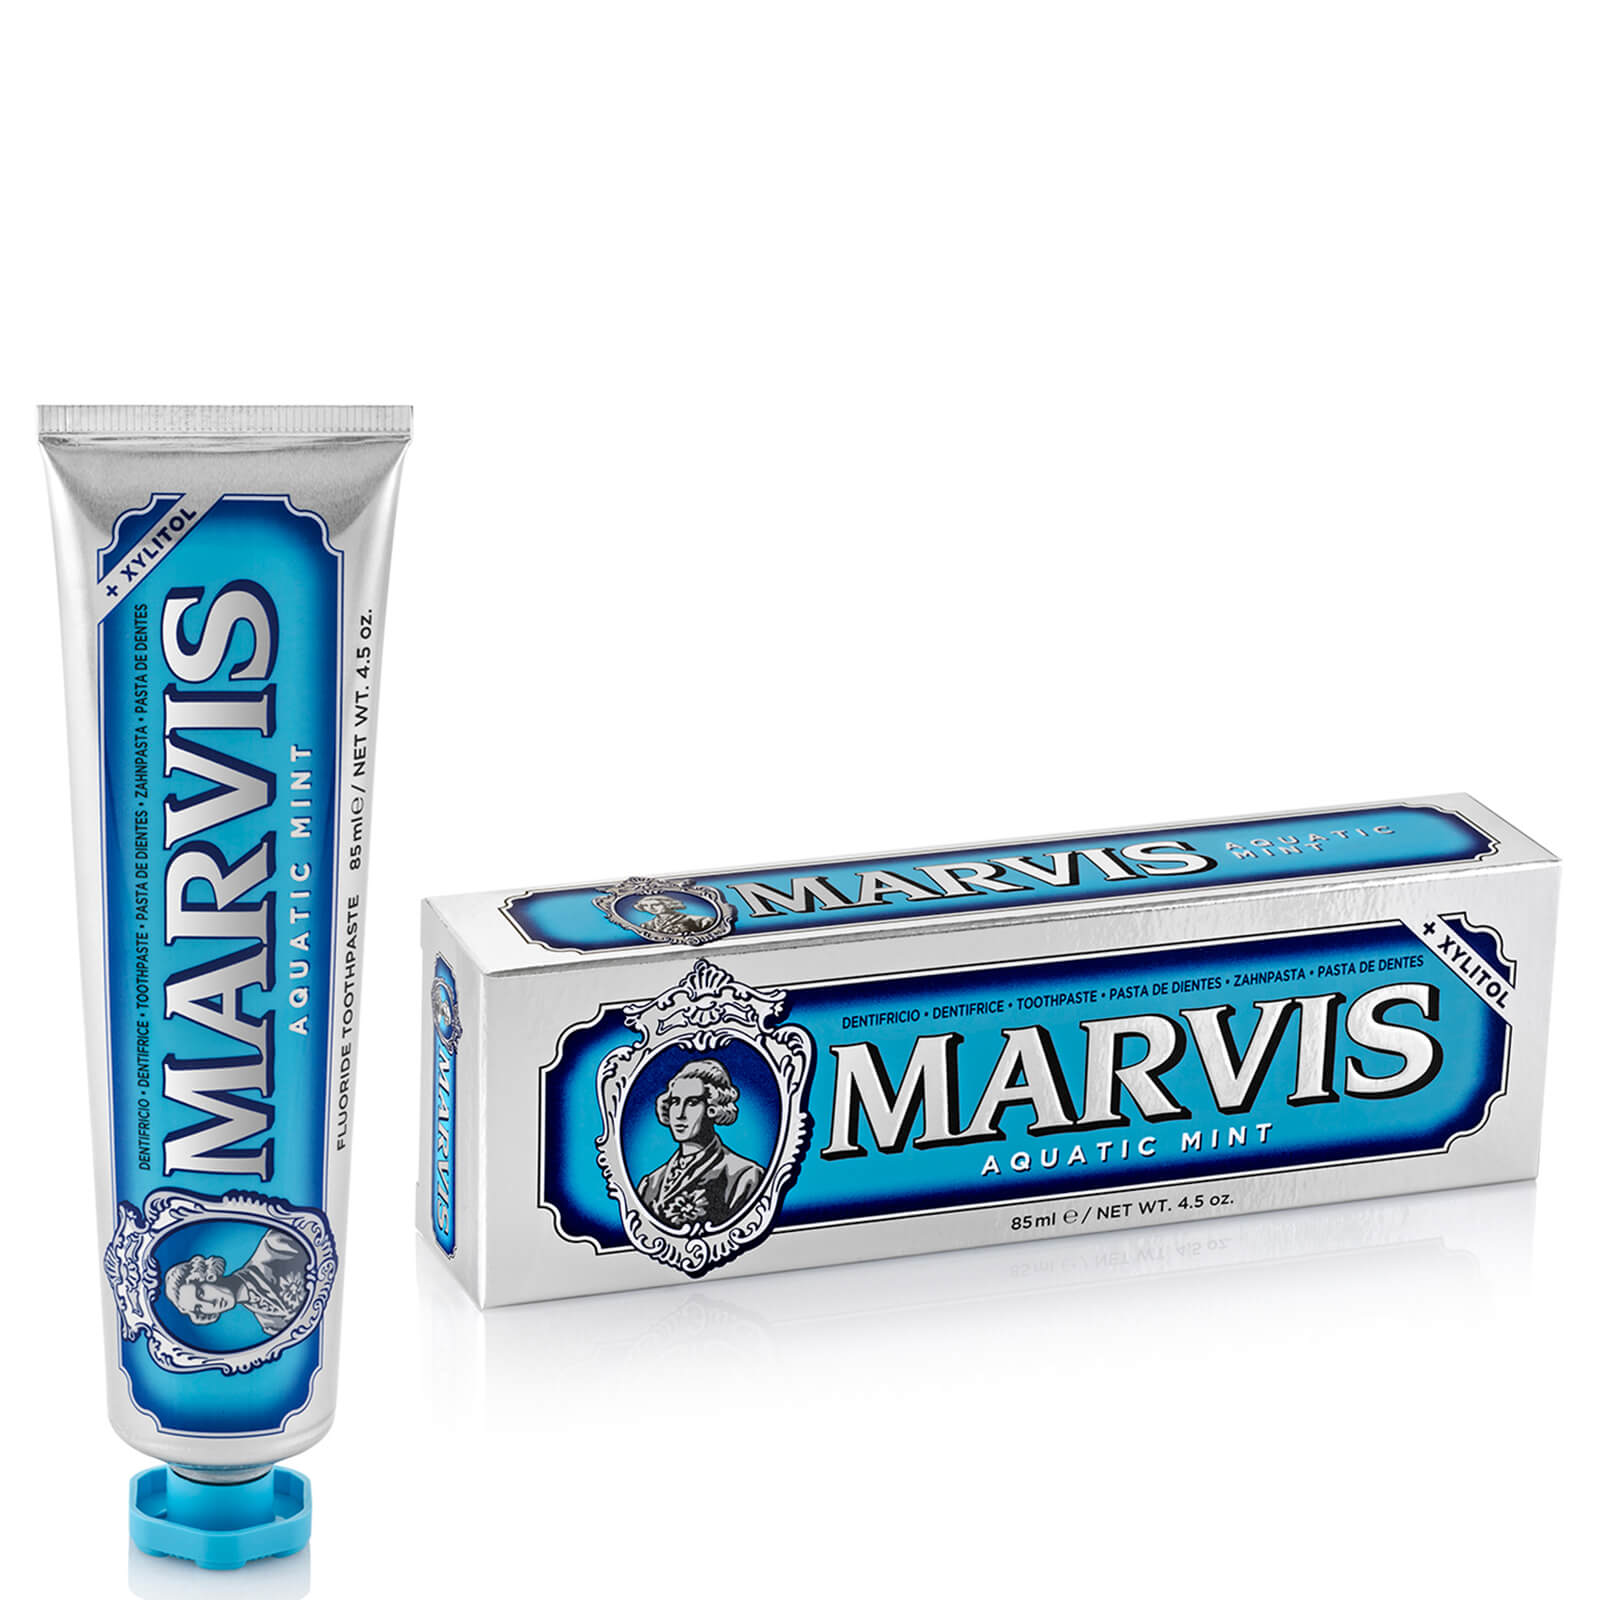 Marvis Aquatic Mint Toothpaste (85ml) lookfantastic.com imagine